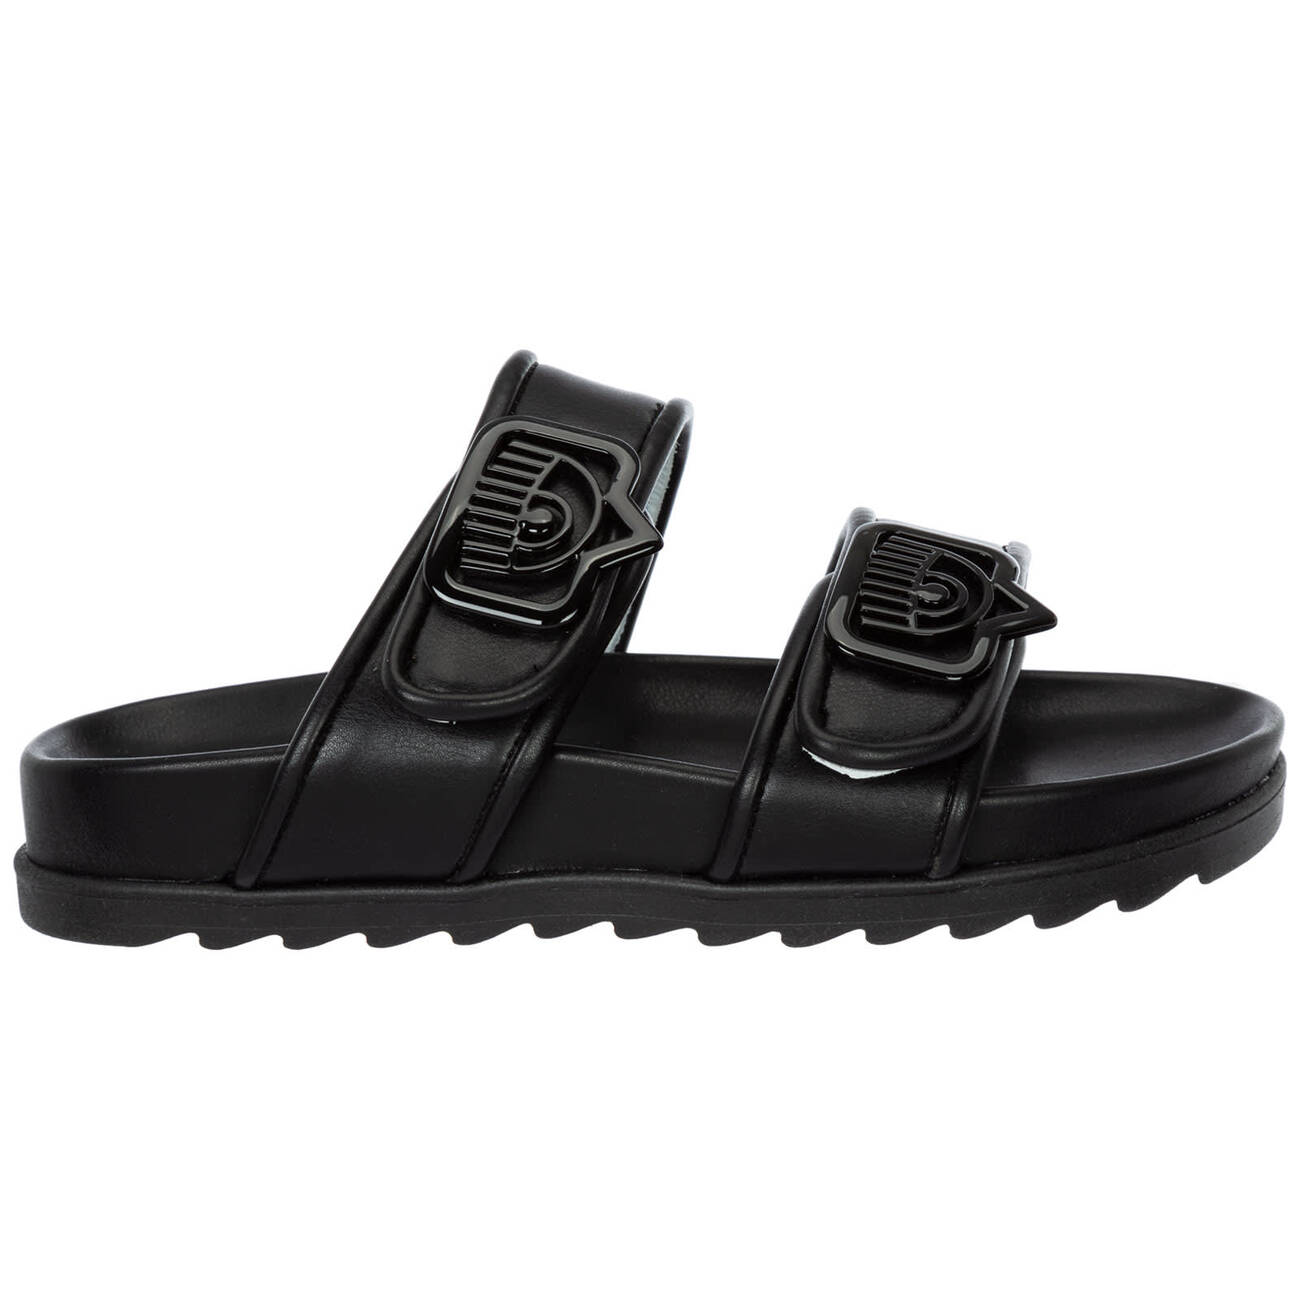 Chiara Ferragni Eyelike Sandals in black